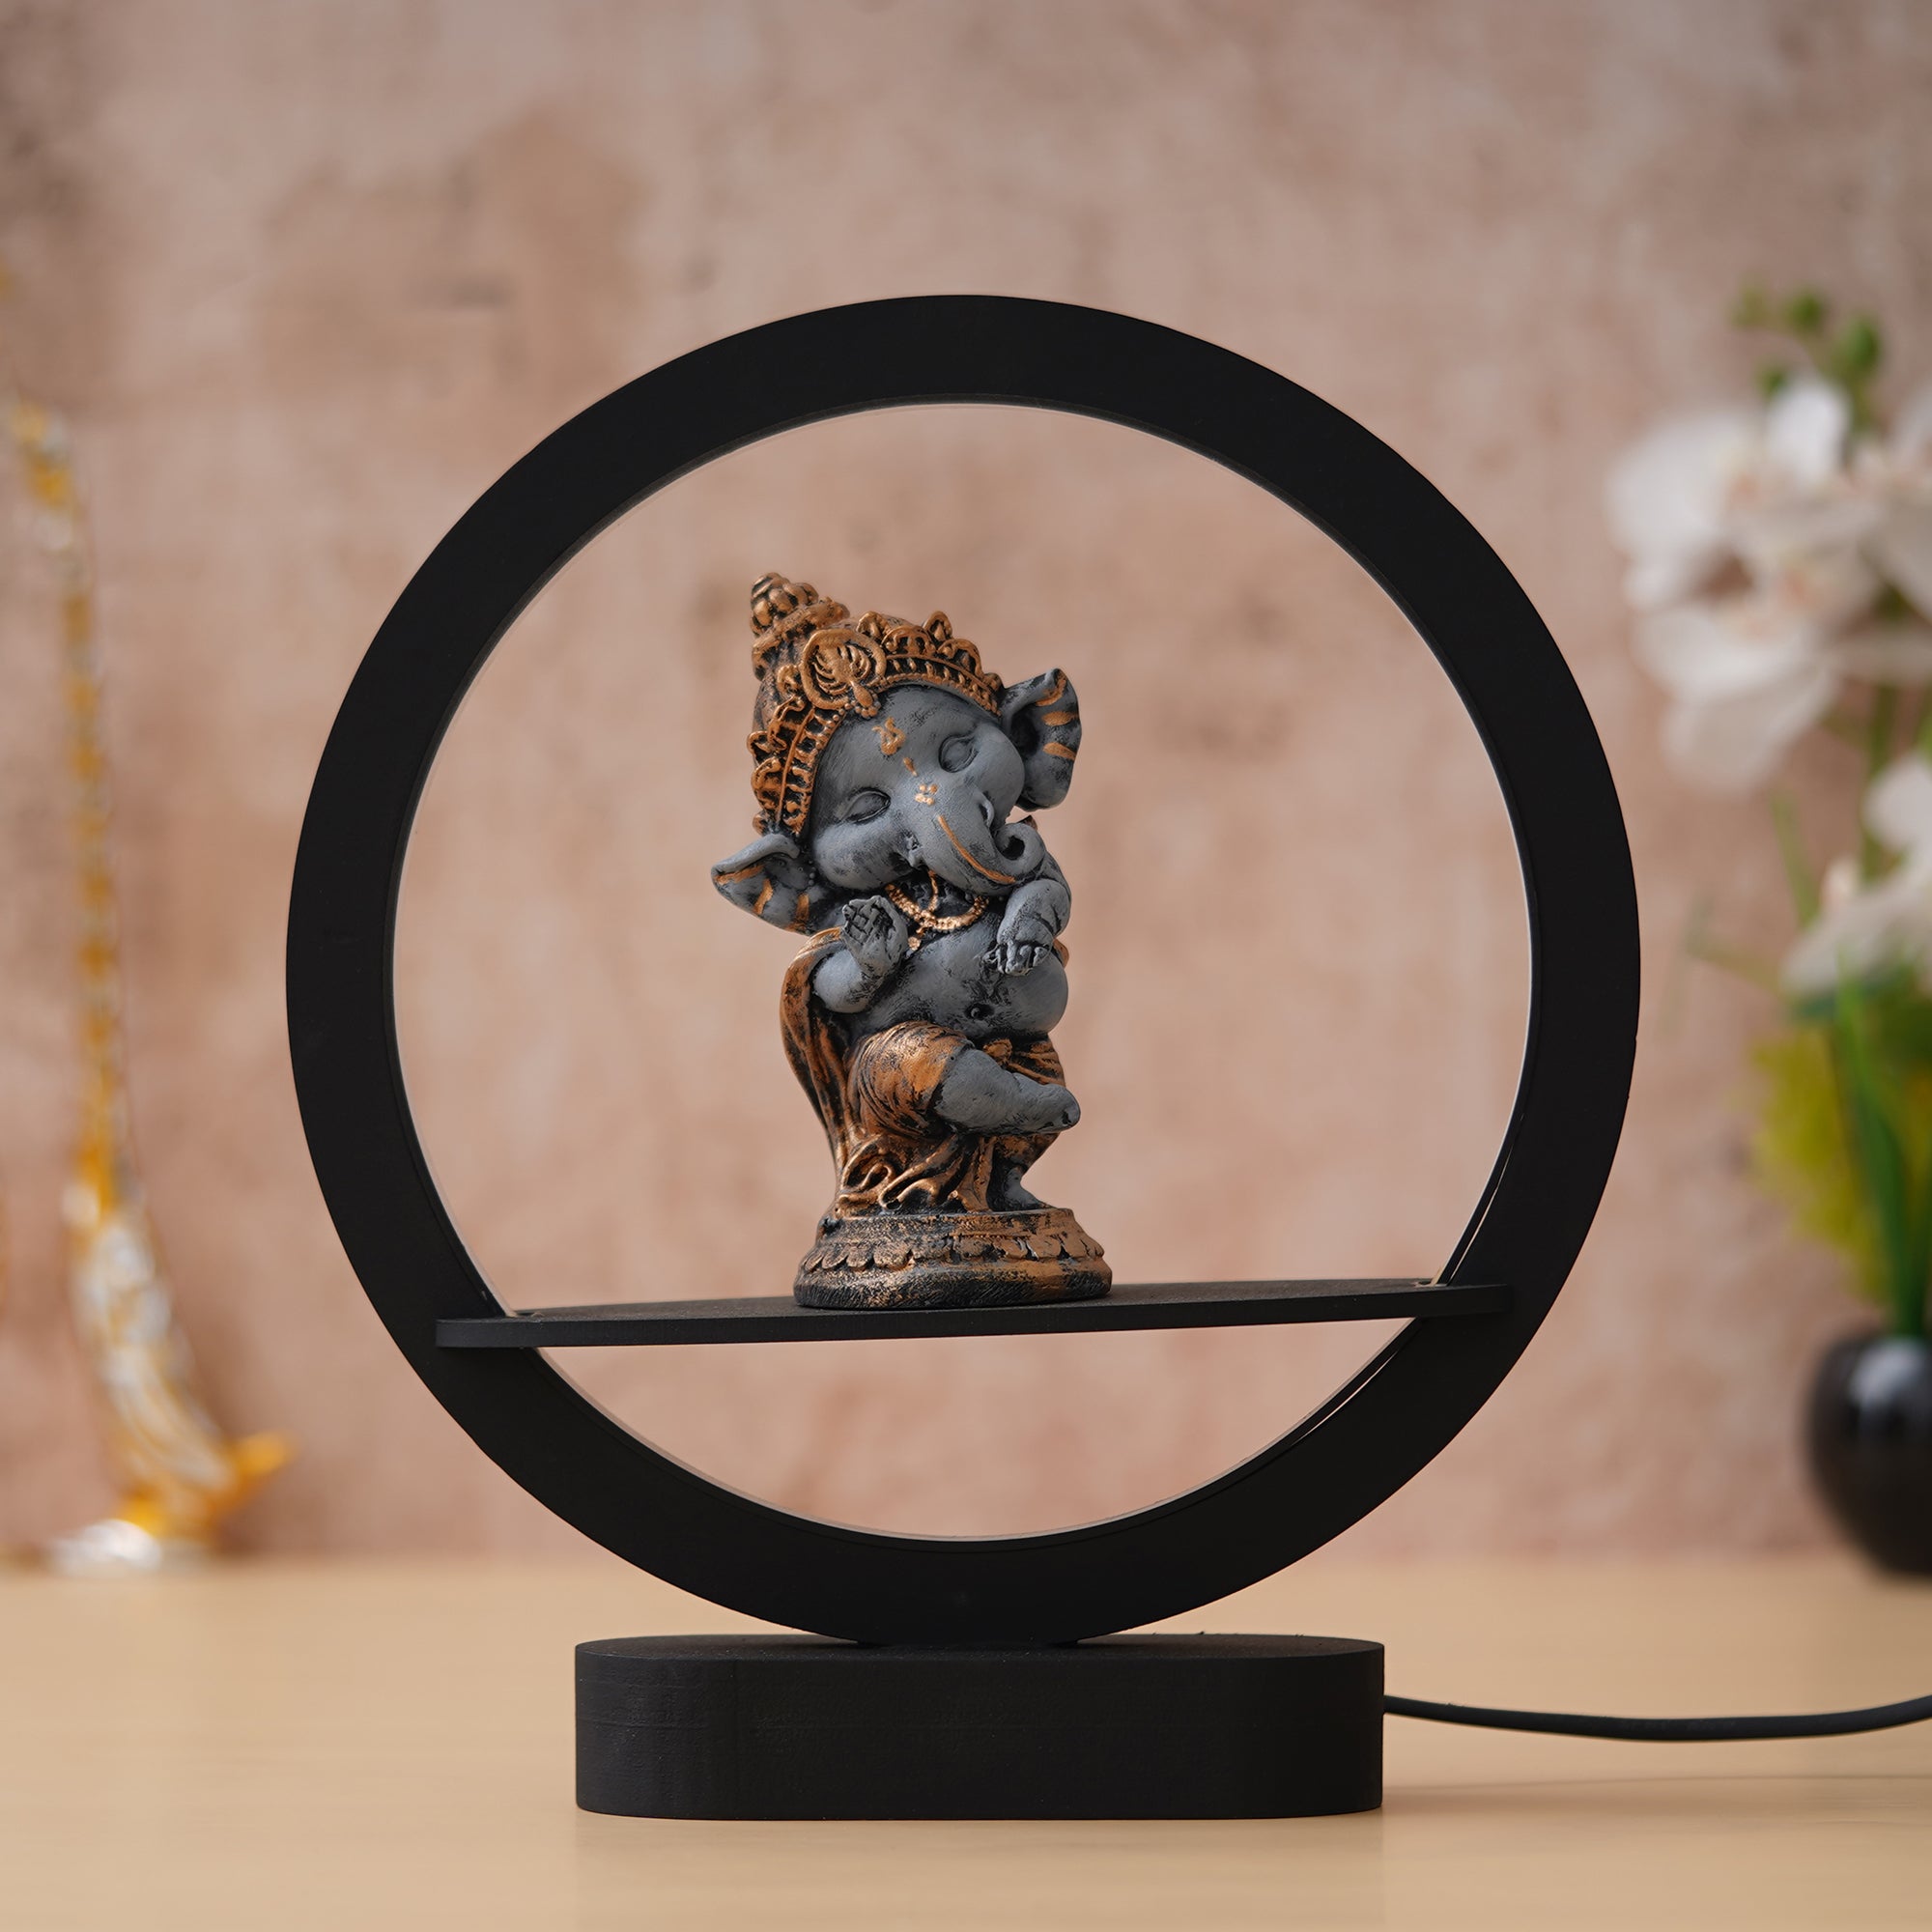 eCraftIndia Grey and Golden Polyresin Handcrafted Lord Ganesha Idol Decorative Circular Night Lamp